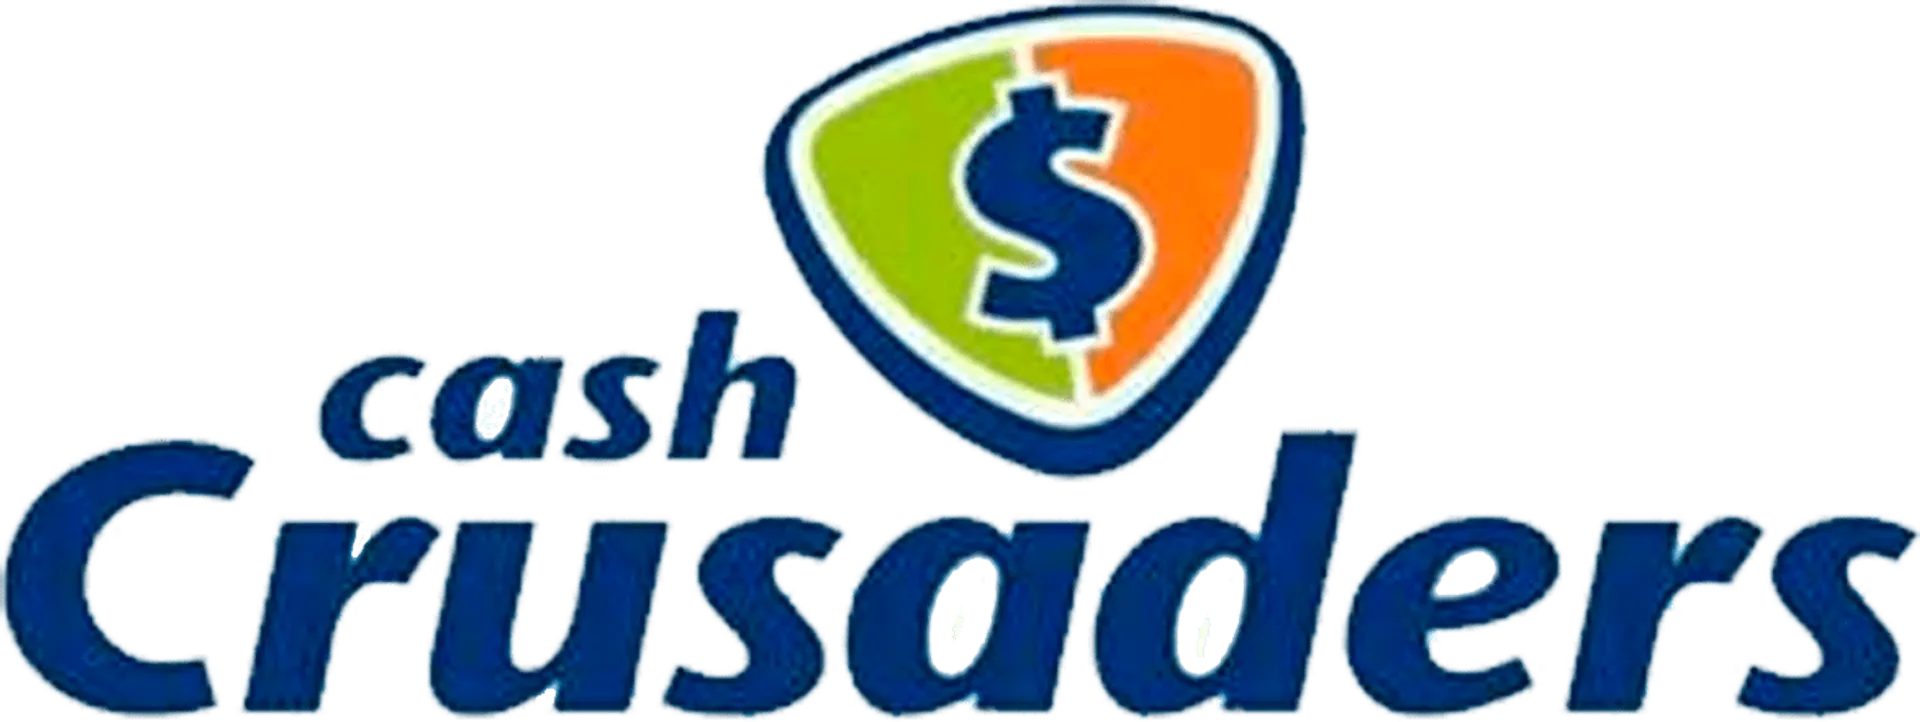 CASH CRUSADERS logo. Current catalogue